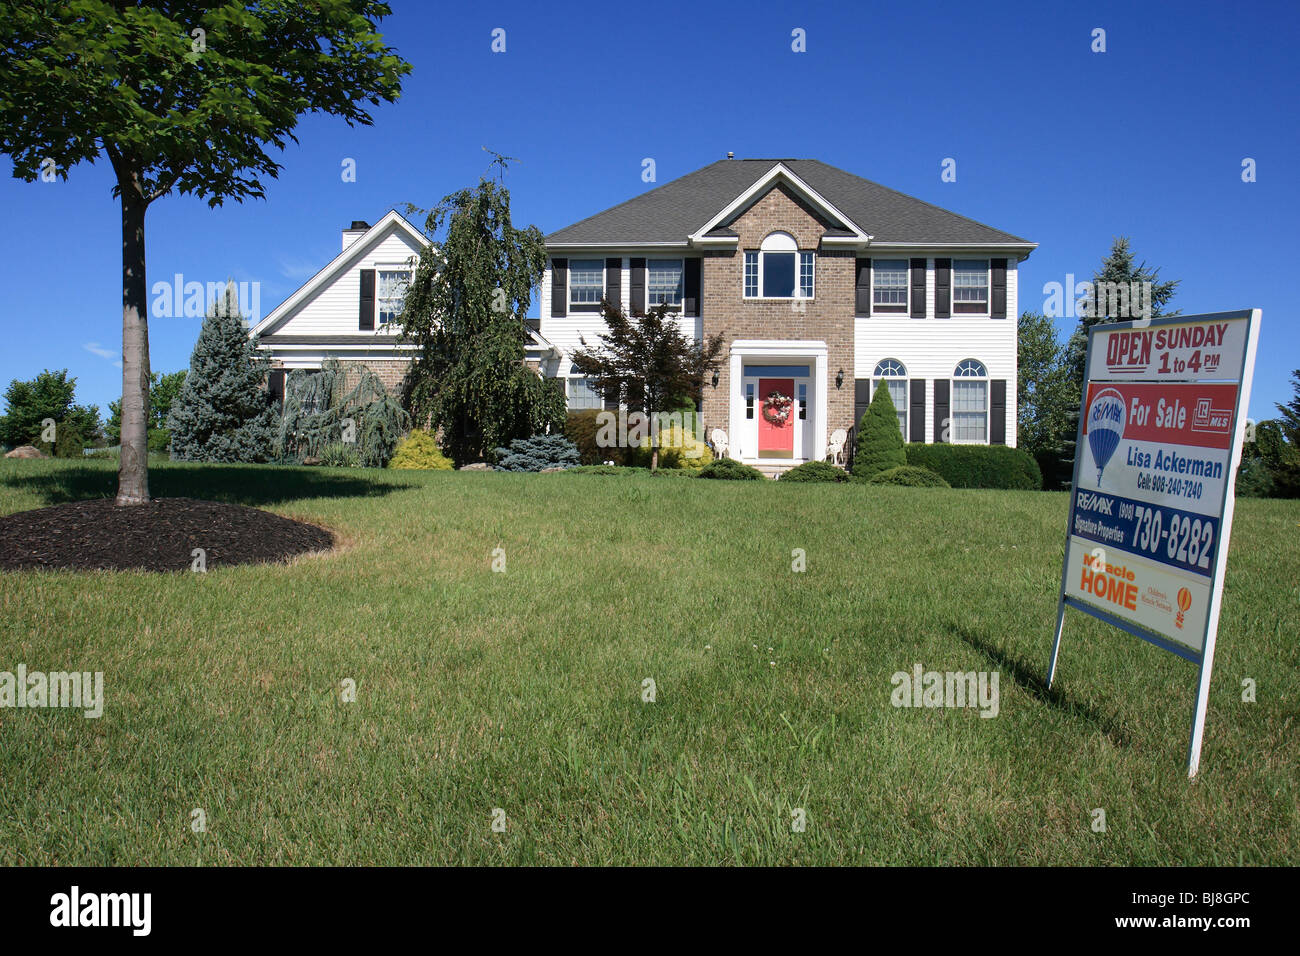 Single family house for sale, USA Stock Photo